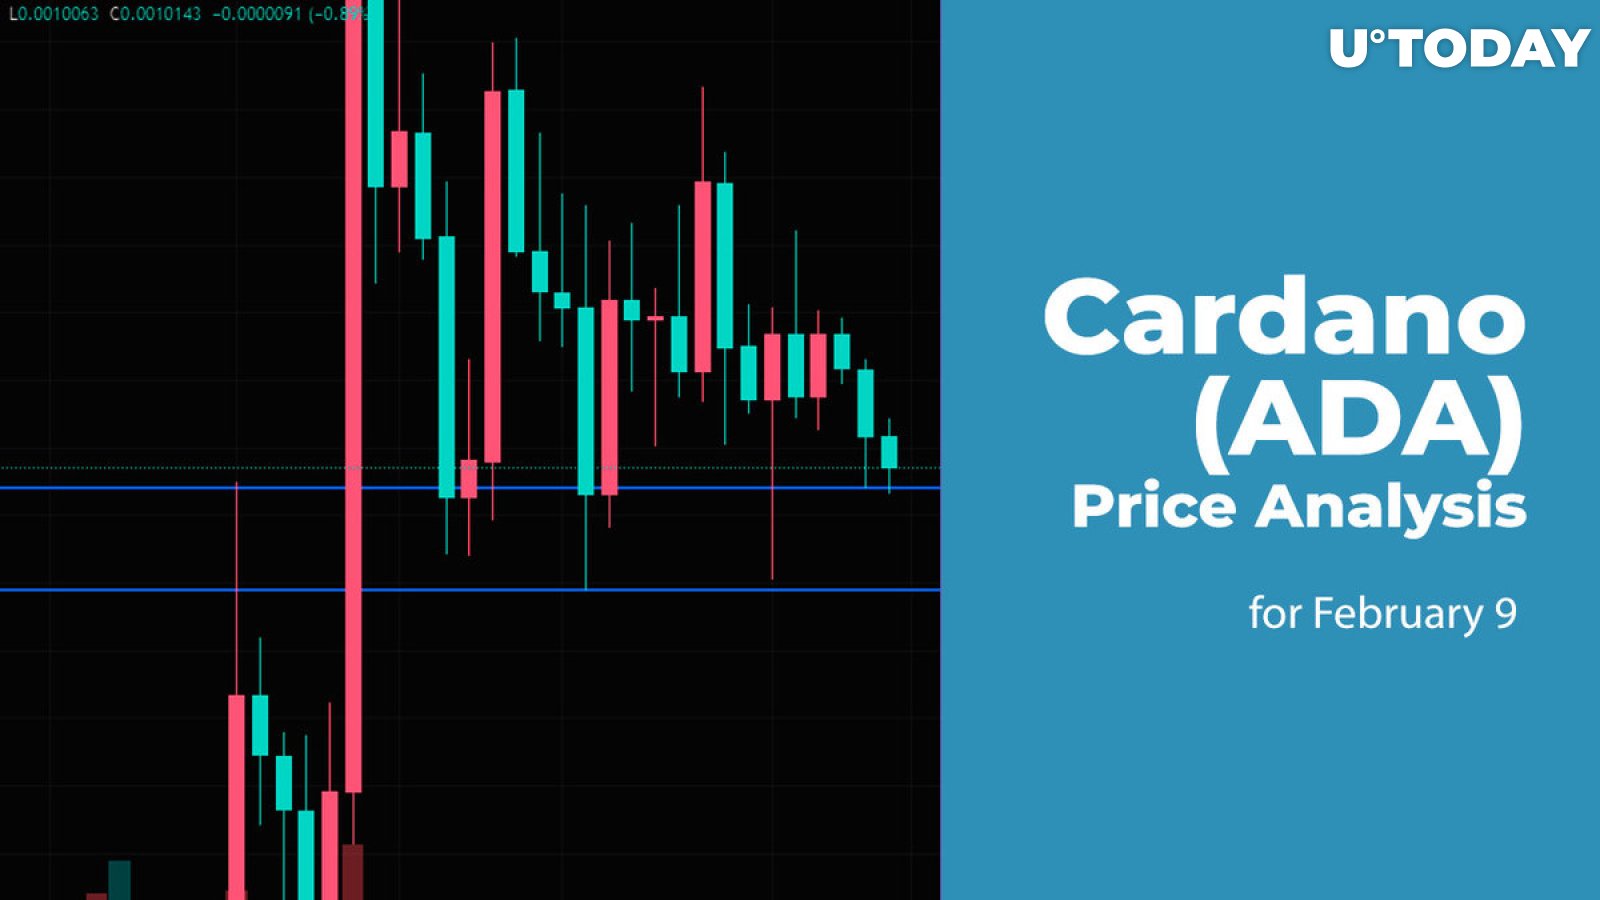 Cardano (ADA) Price Analysis for February 9